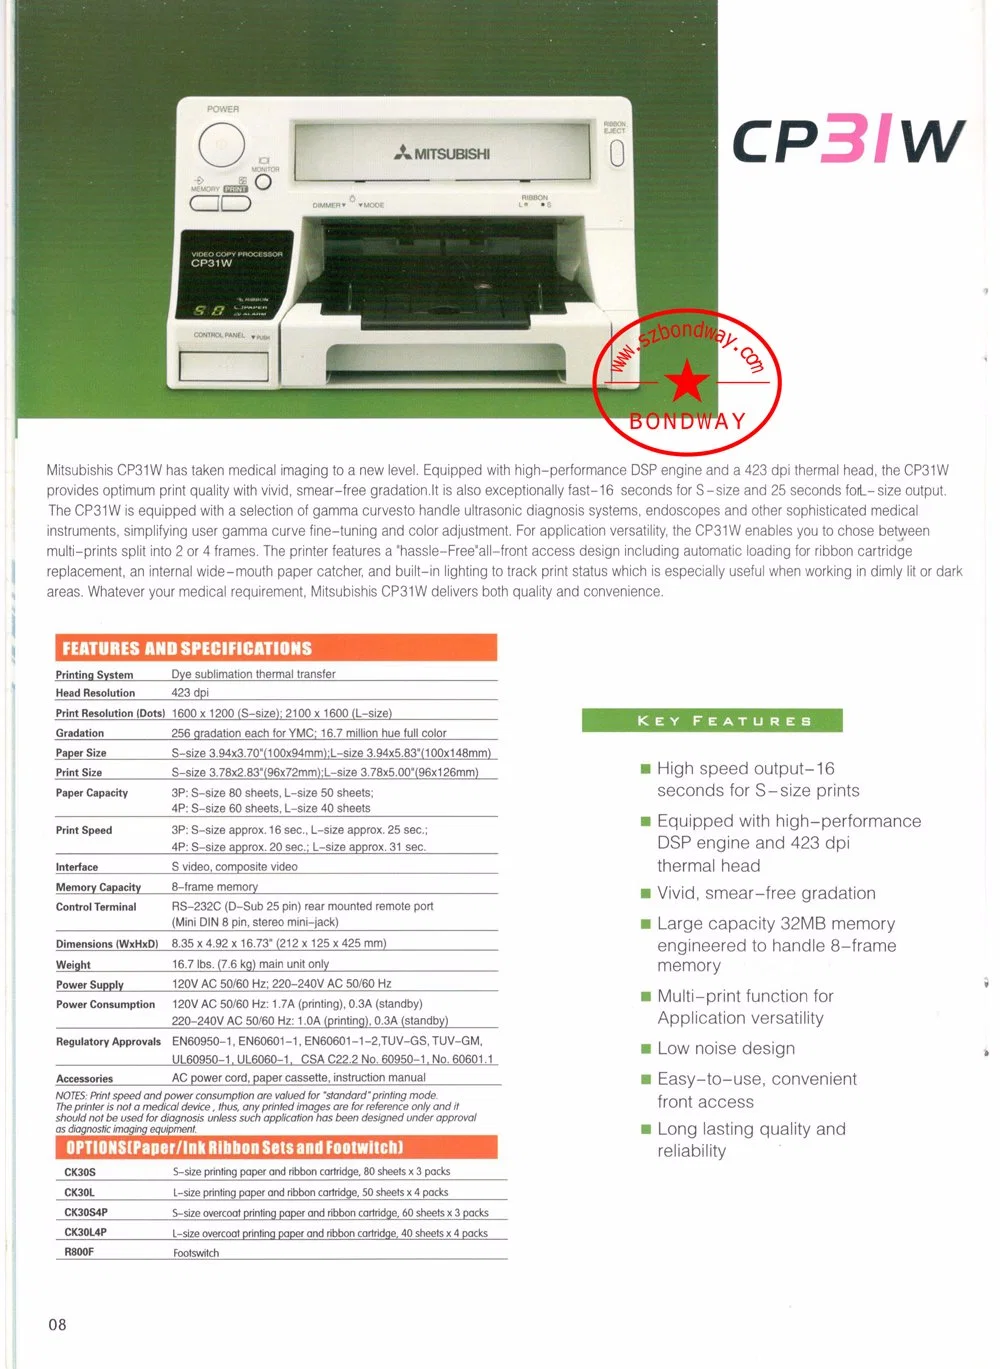 Color Doppler Ultrasound Scanner, Medical Thermal Printer, Mitsubishi Cp31W, Thermal Color Video Printer